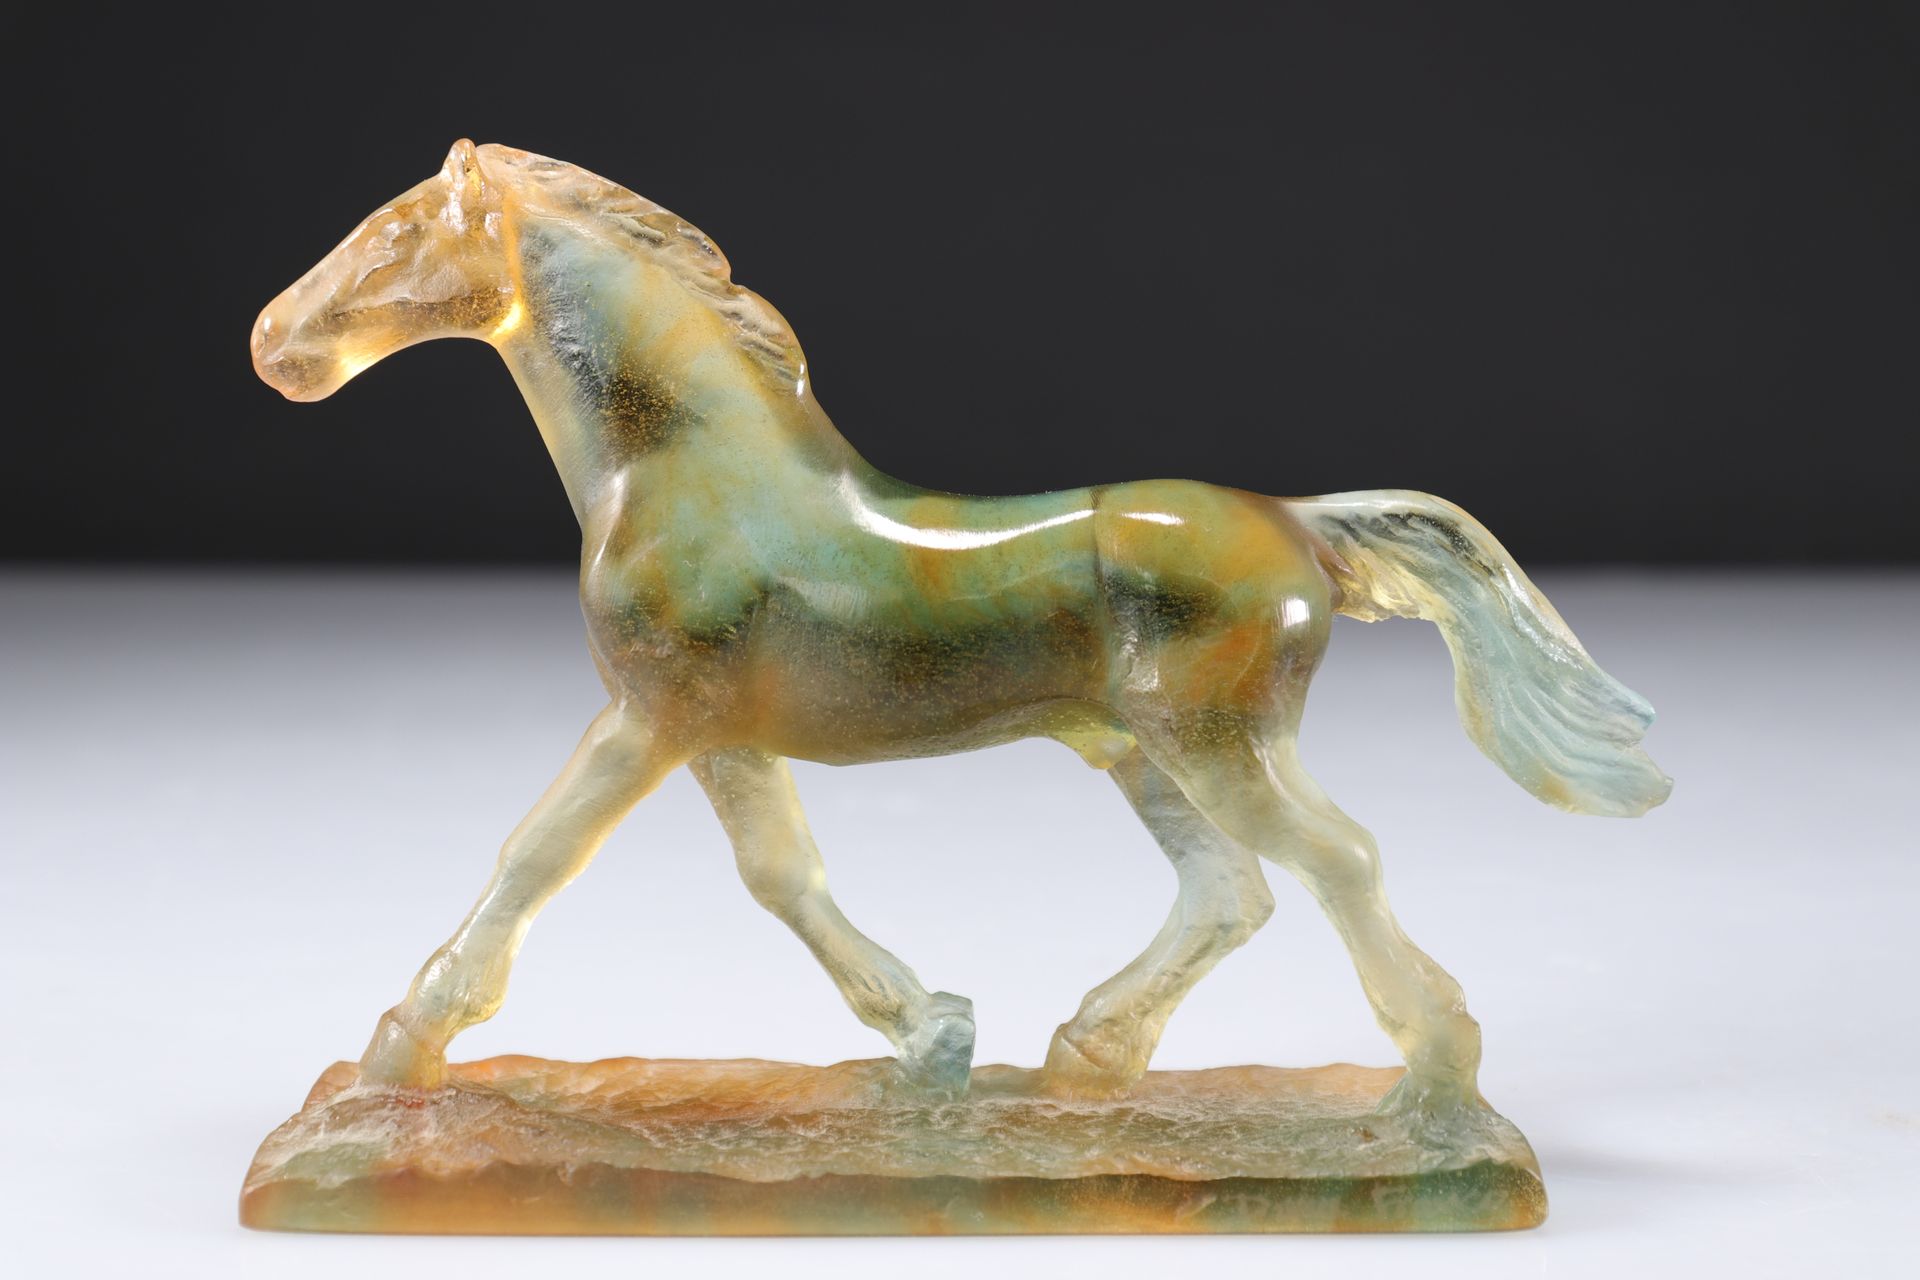 Statue cheval Daum en pâte de verre Daum horse statue in glass paste
Weight: 300&hellip;